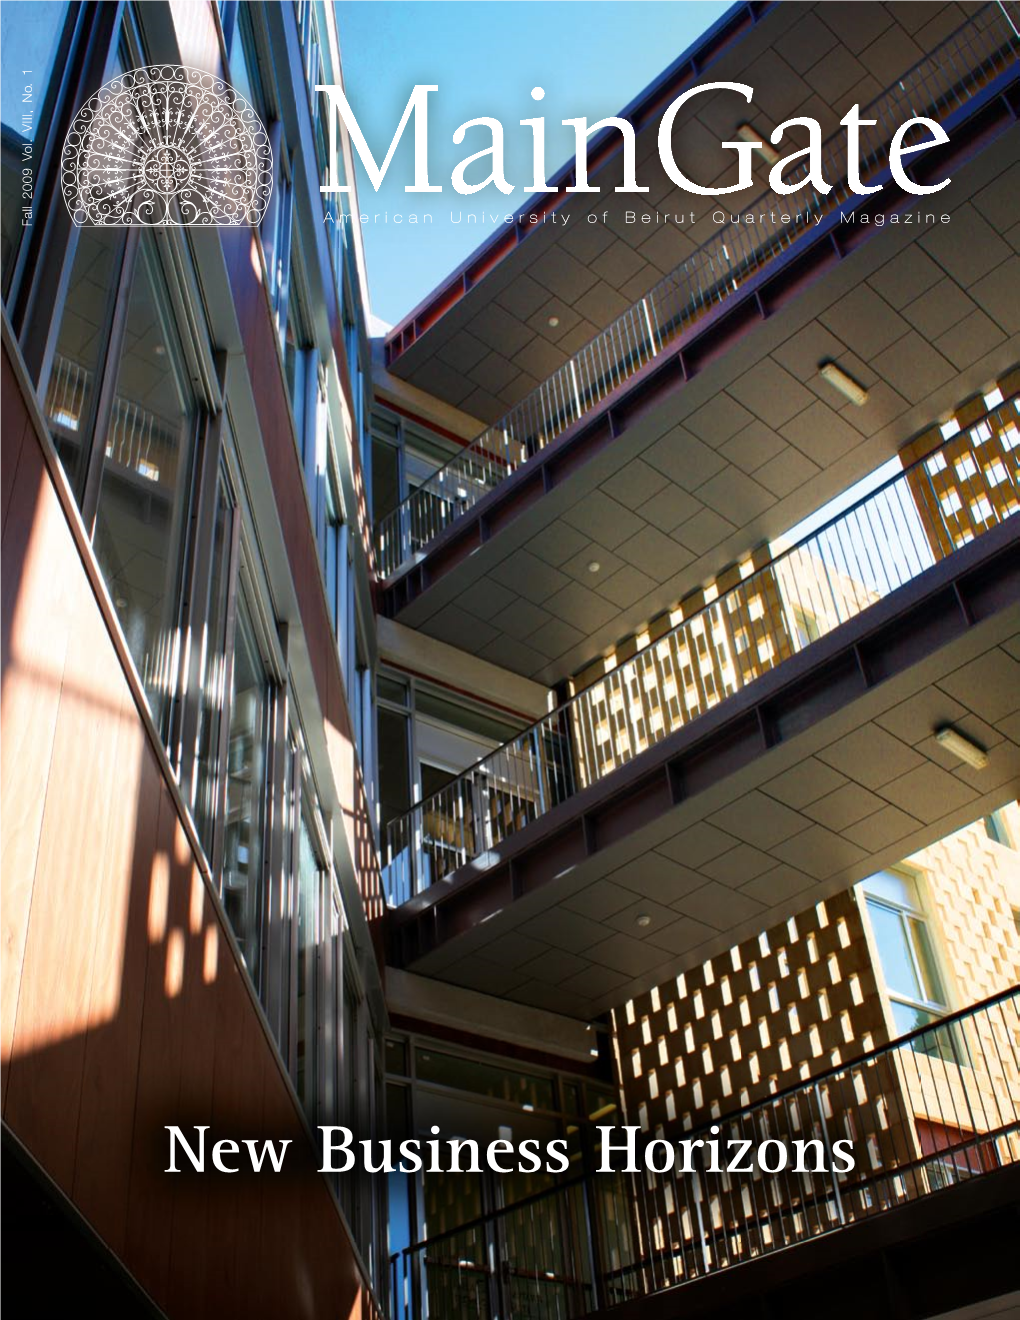 New Business Horizons Business New Maingateamerican University of Beirut Quarterly Magazine